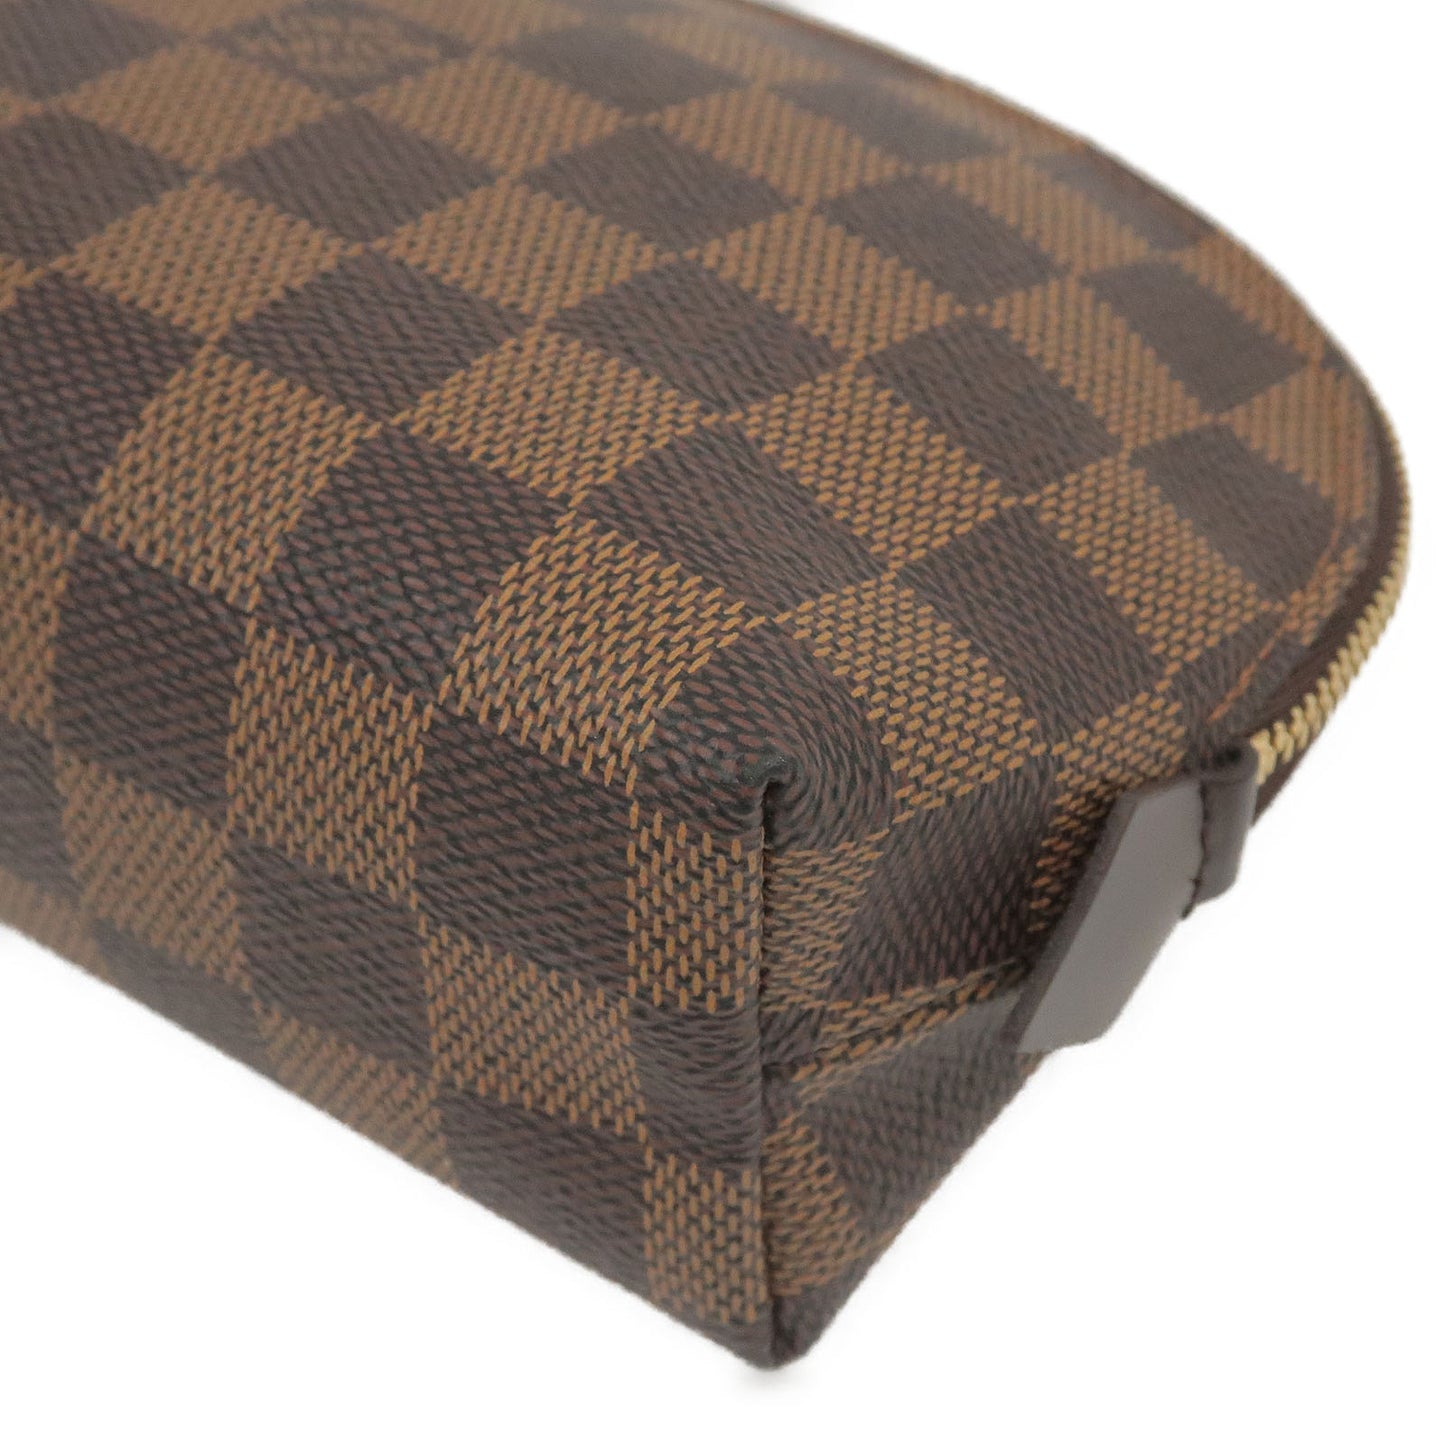 Shop Louis Vuitton DAMIER Cosmetic pouch (N47516, N60024) by iRodori03